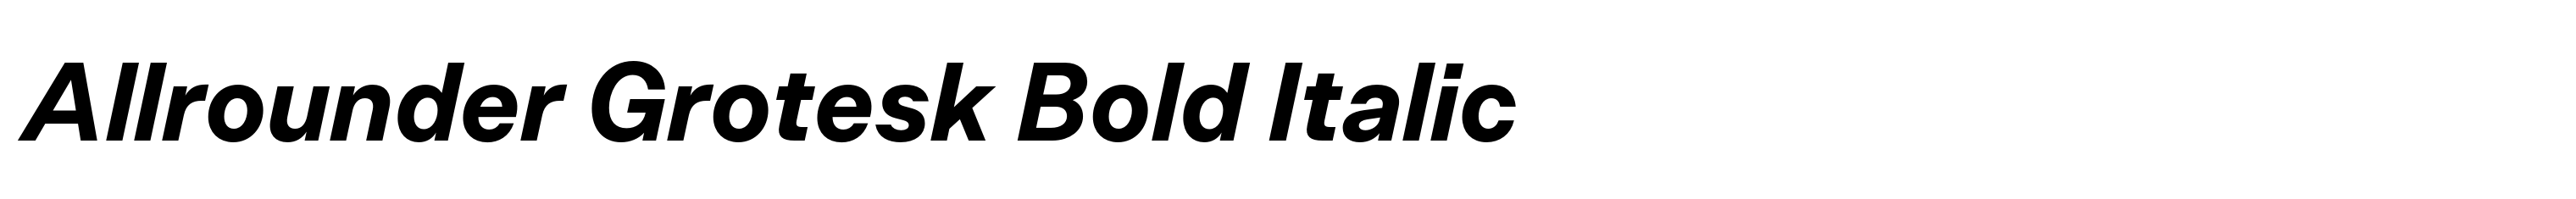 Allrounder Grotesk Bold Italic